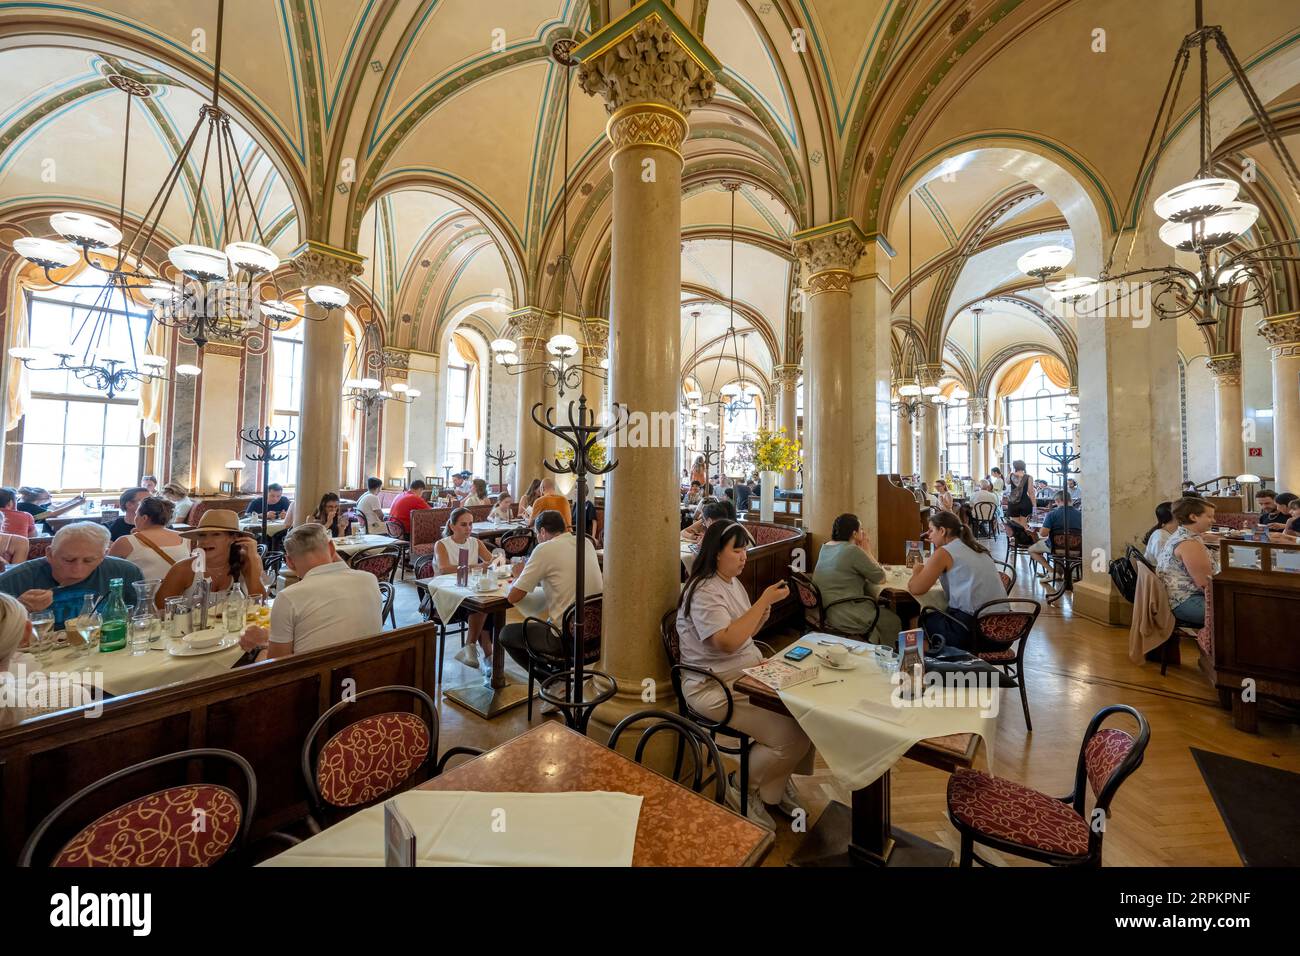 Cafe Central, Vienna, Austria Stock Photo